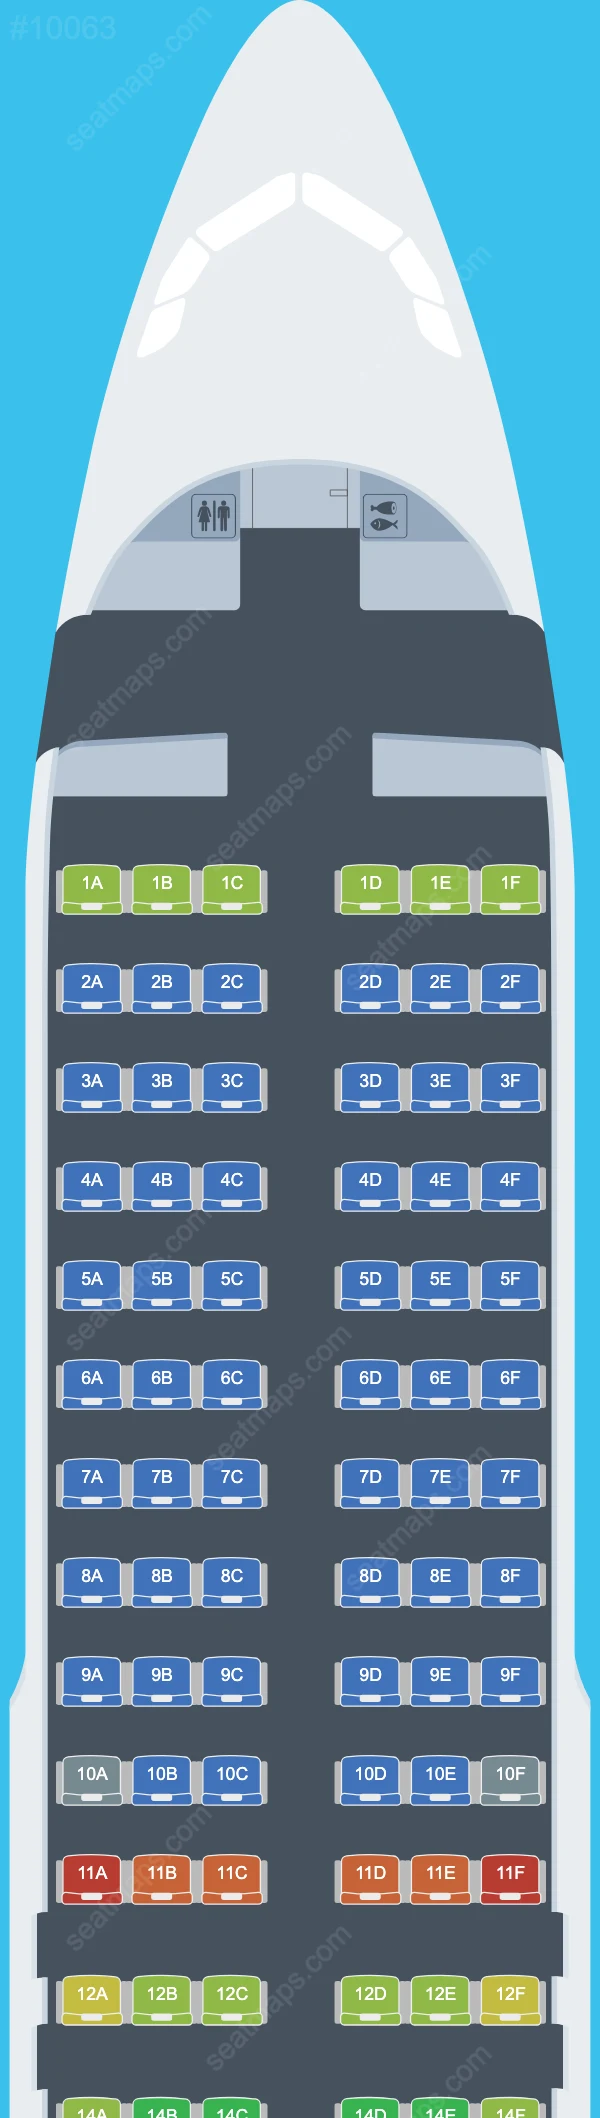 Aero K Airbus A320 Seat Maps A320-200